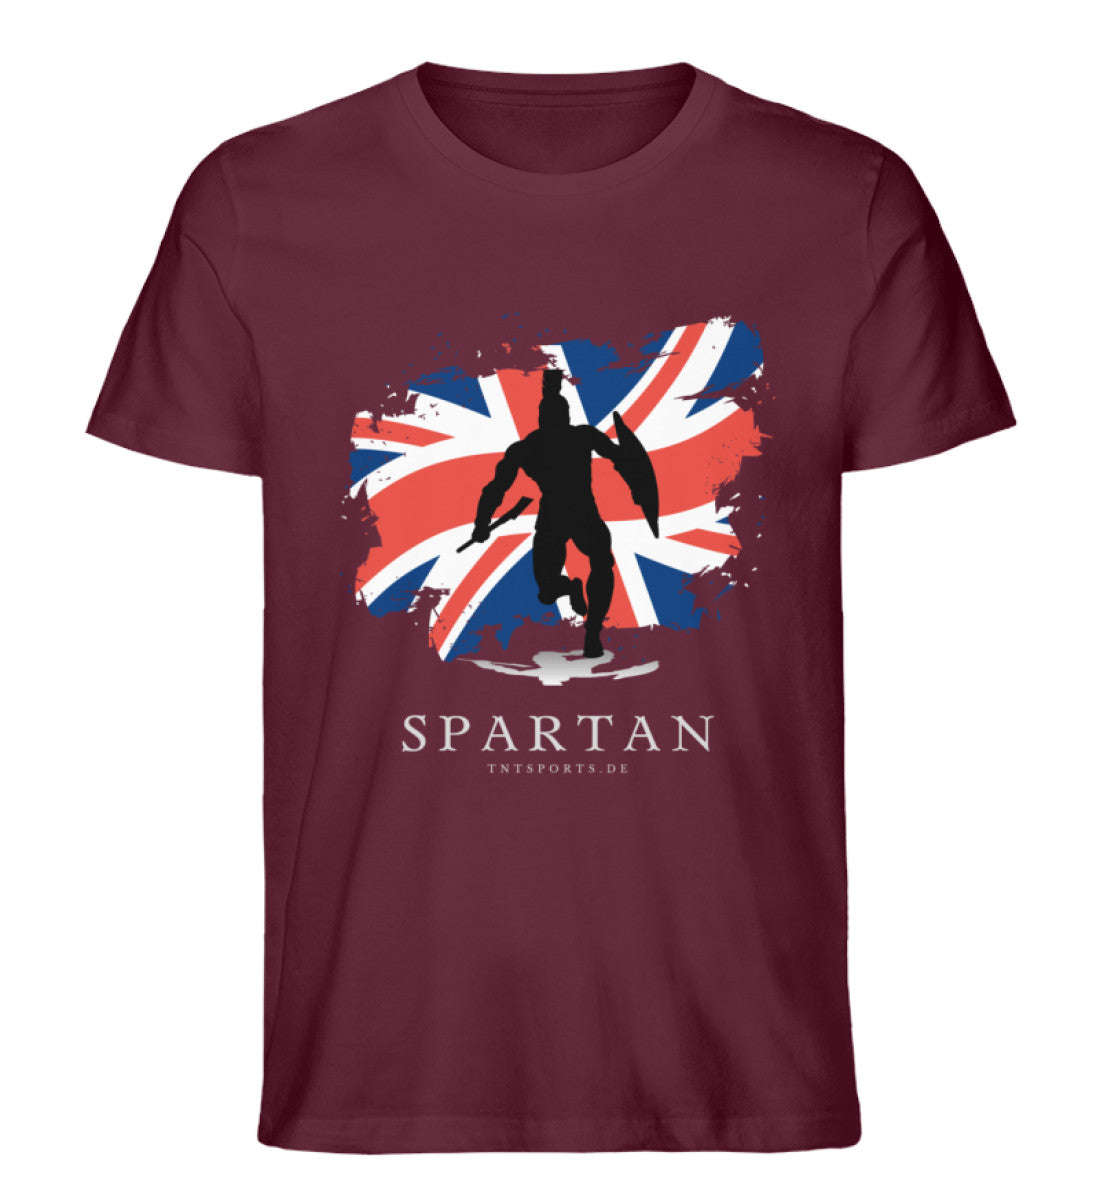 Organic Premium Unisex T-Shirt "UK SPARTAN" Burgundy